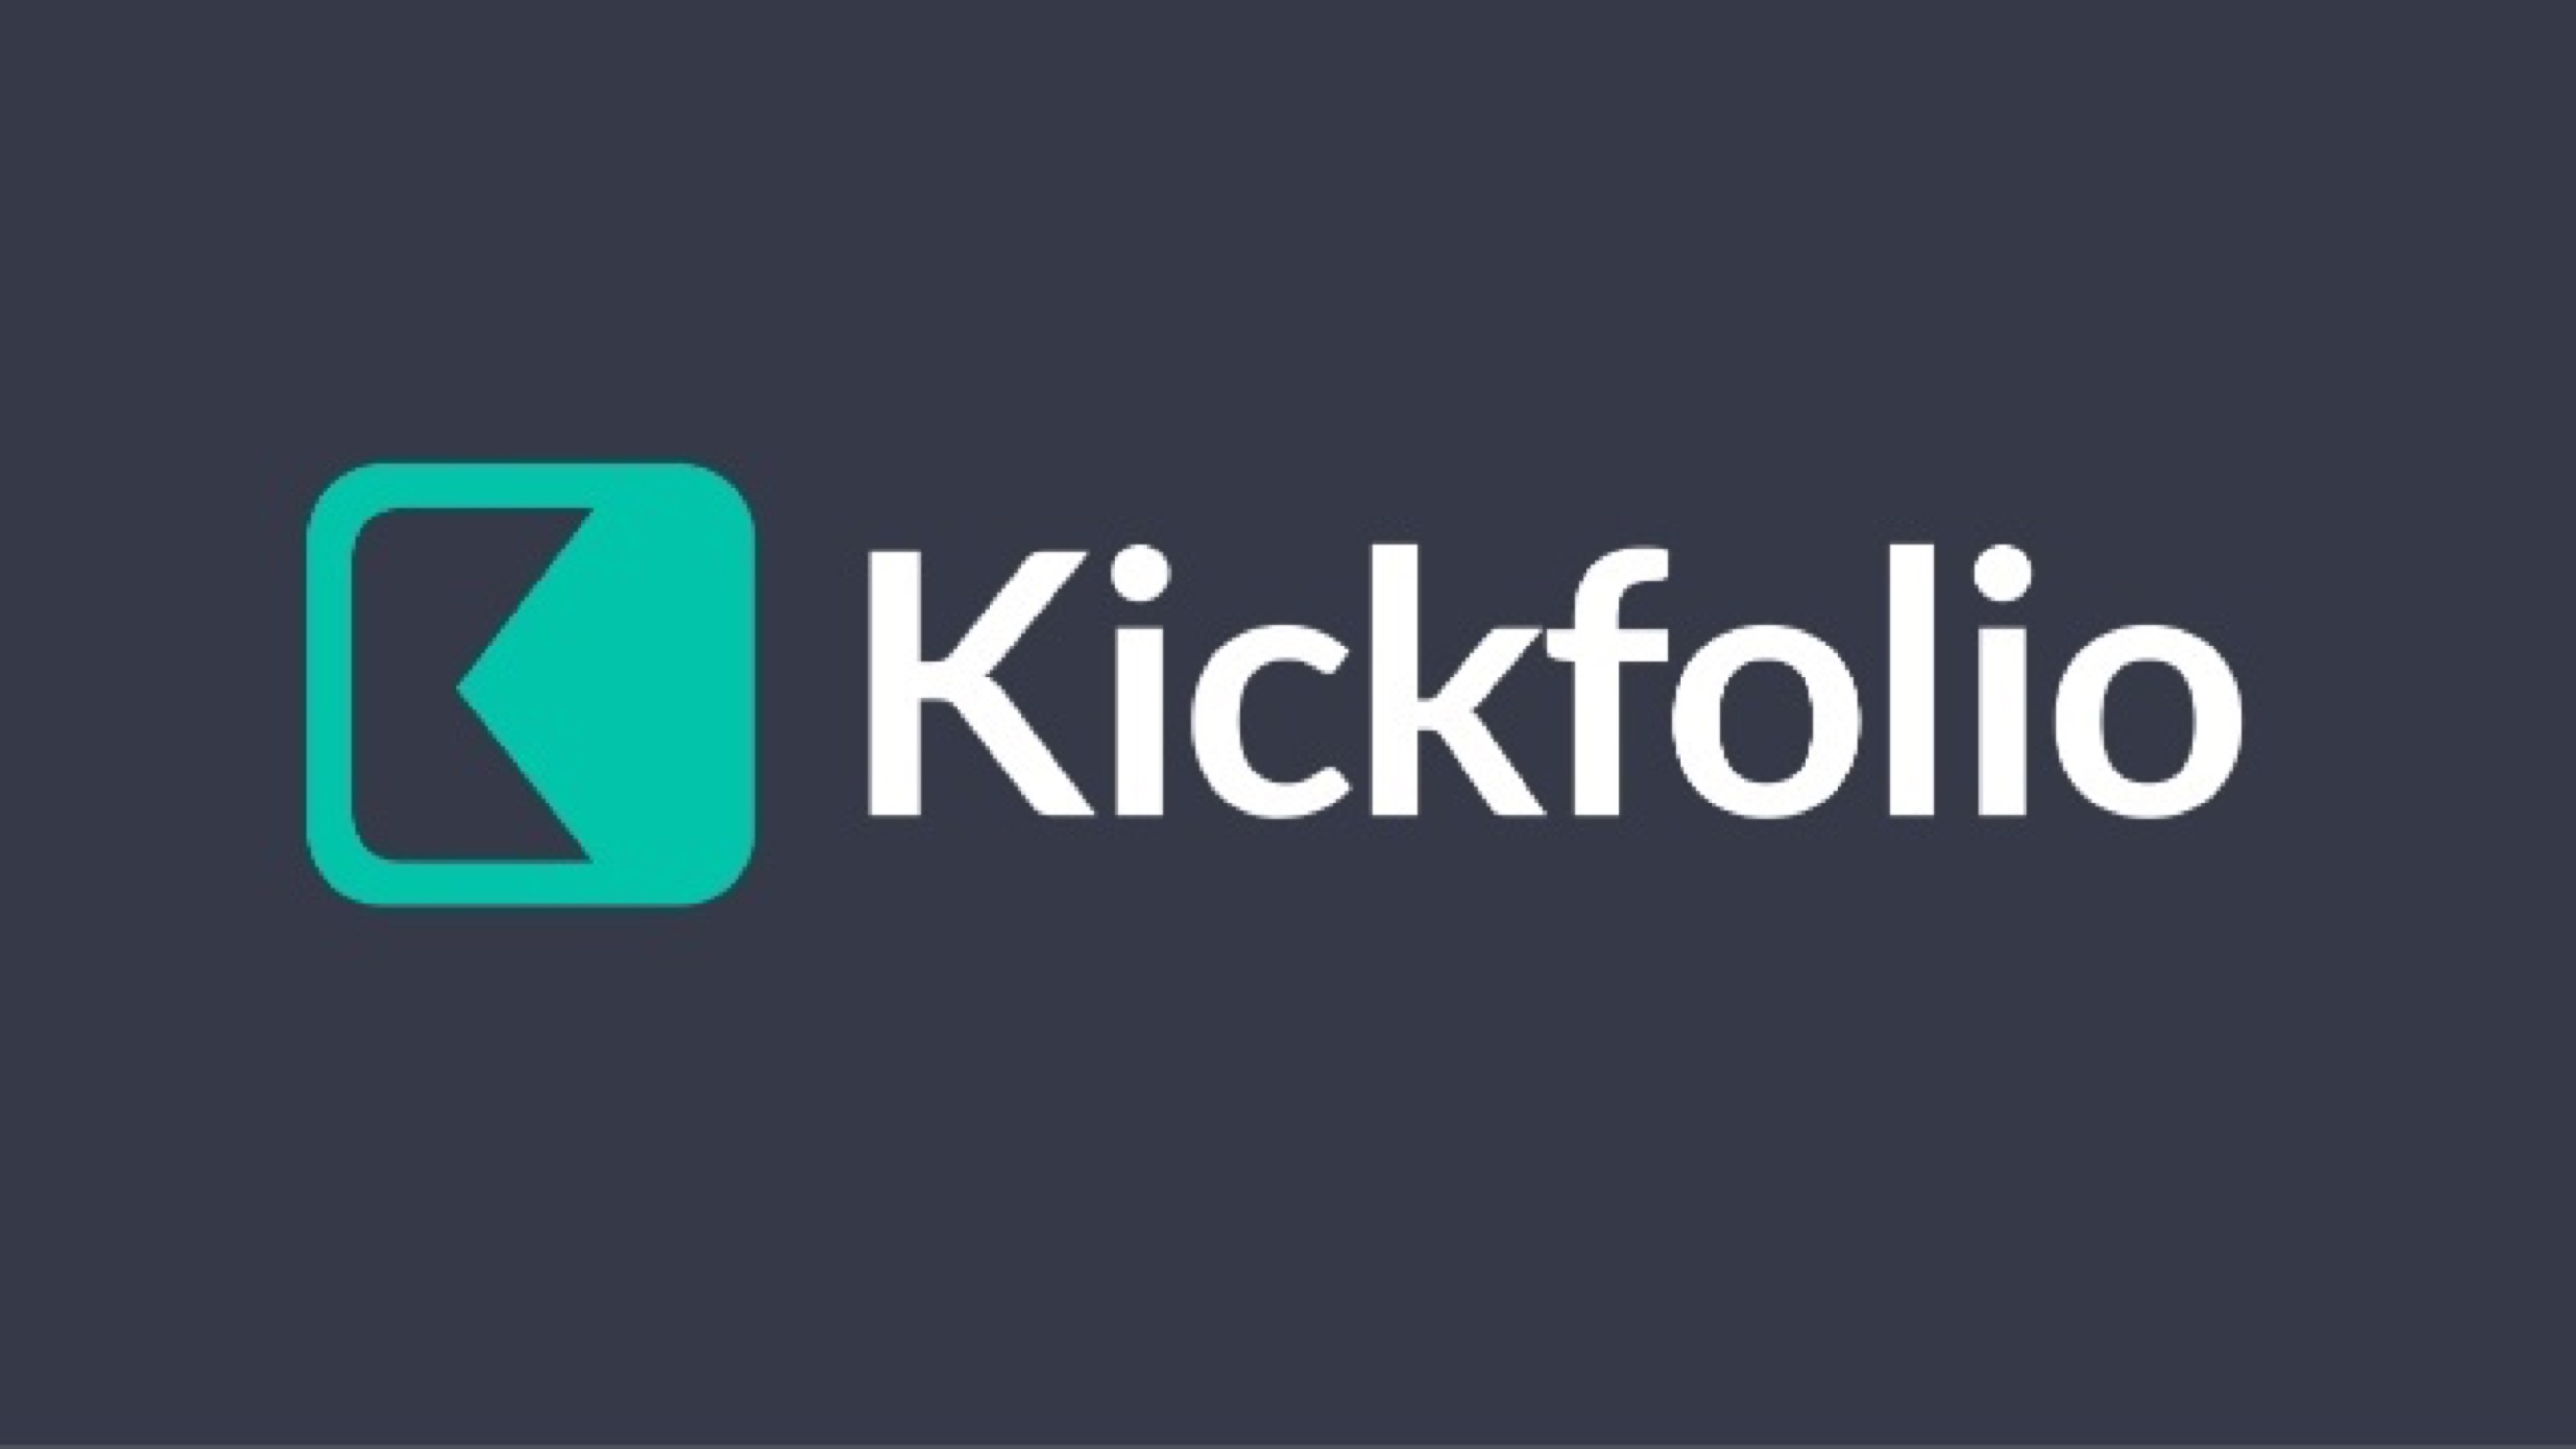 kickfolio-pitch-deck-001